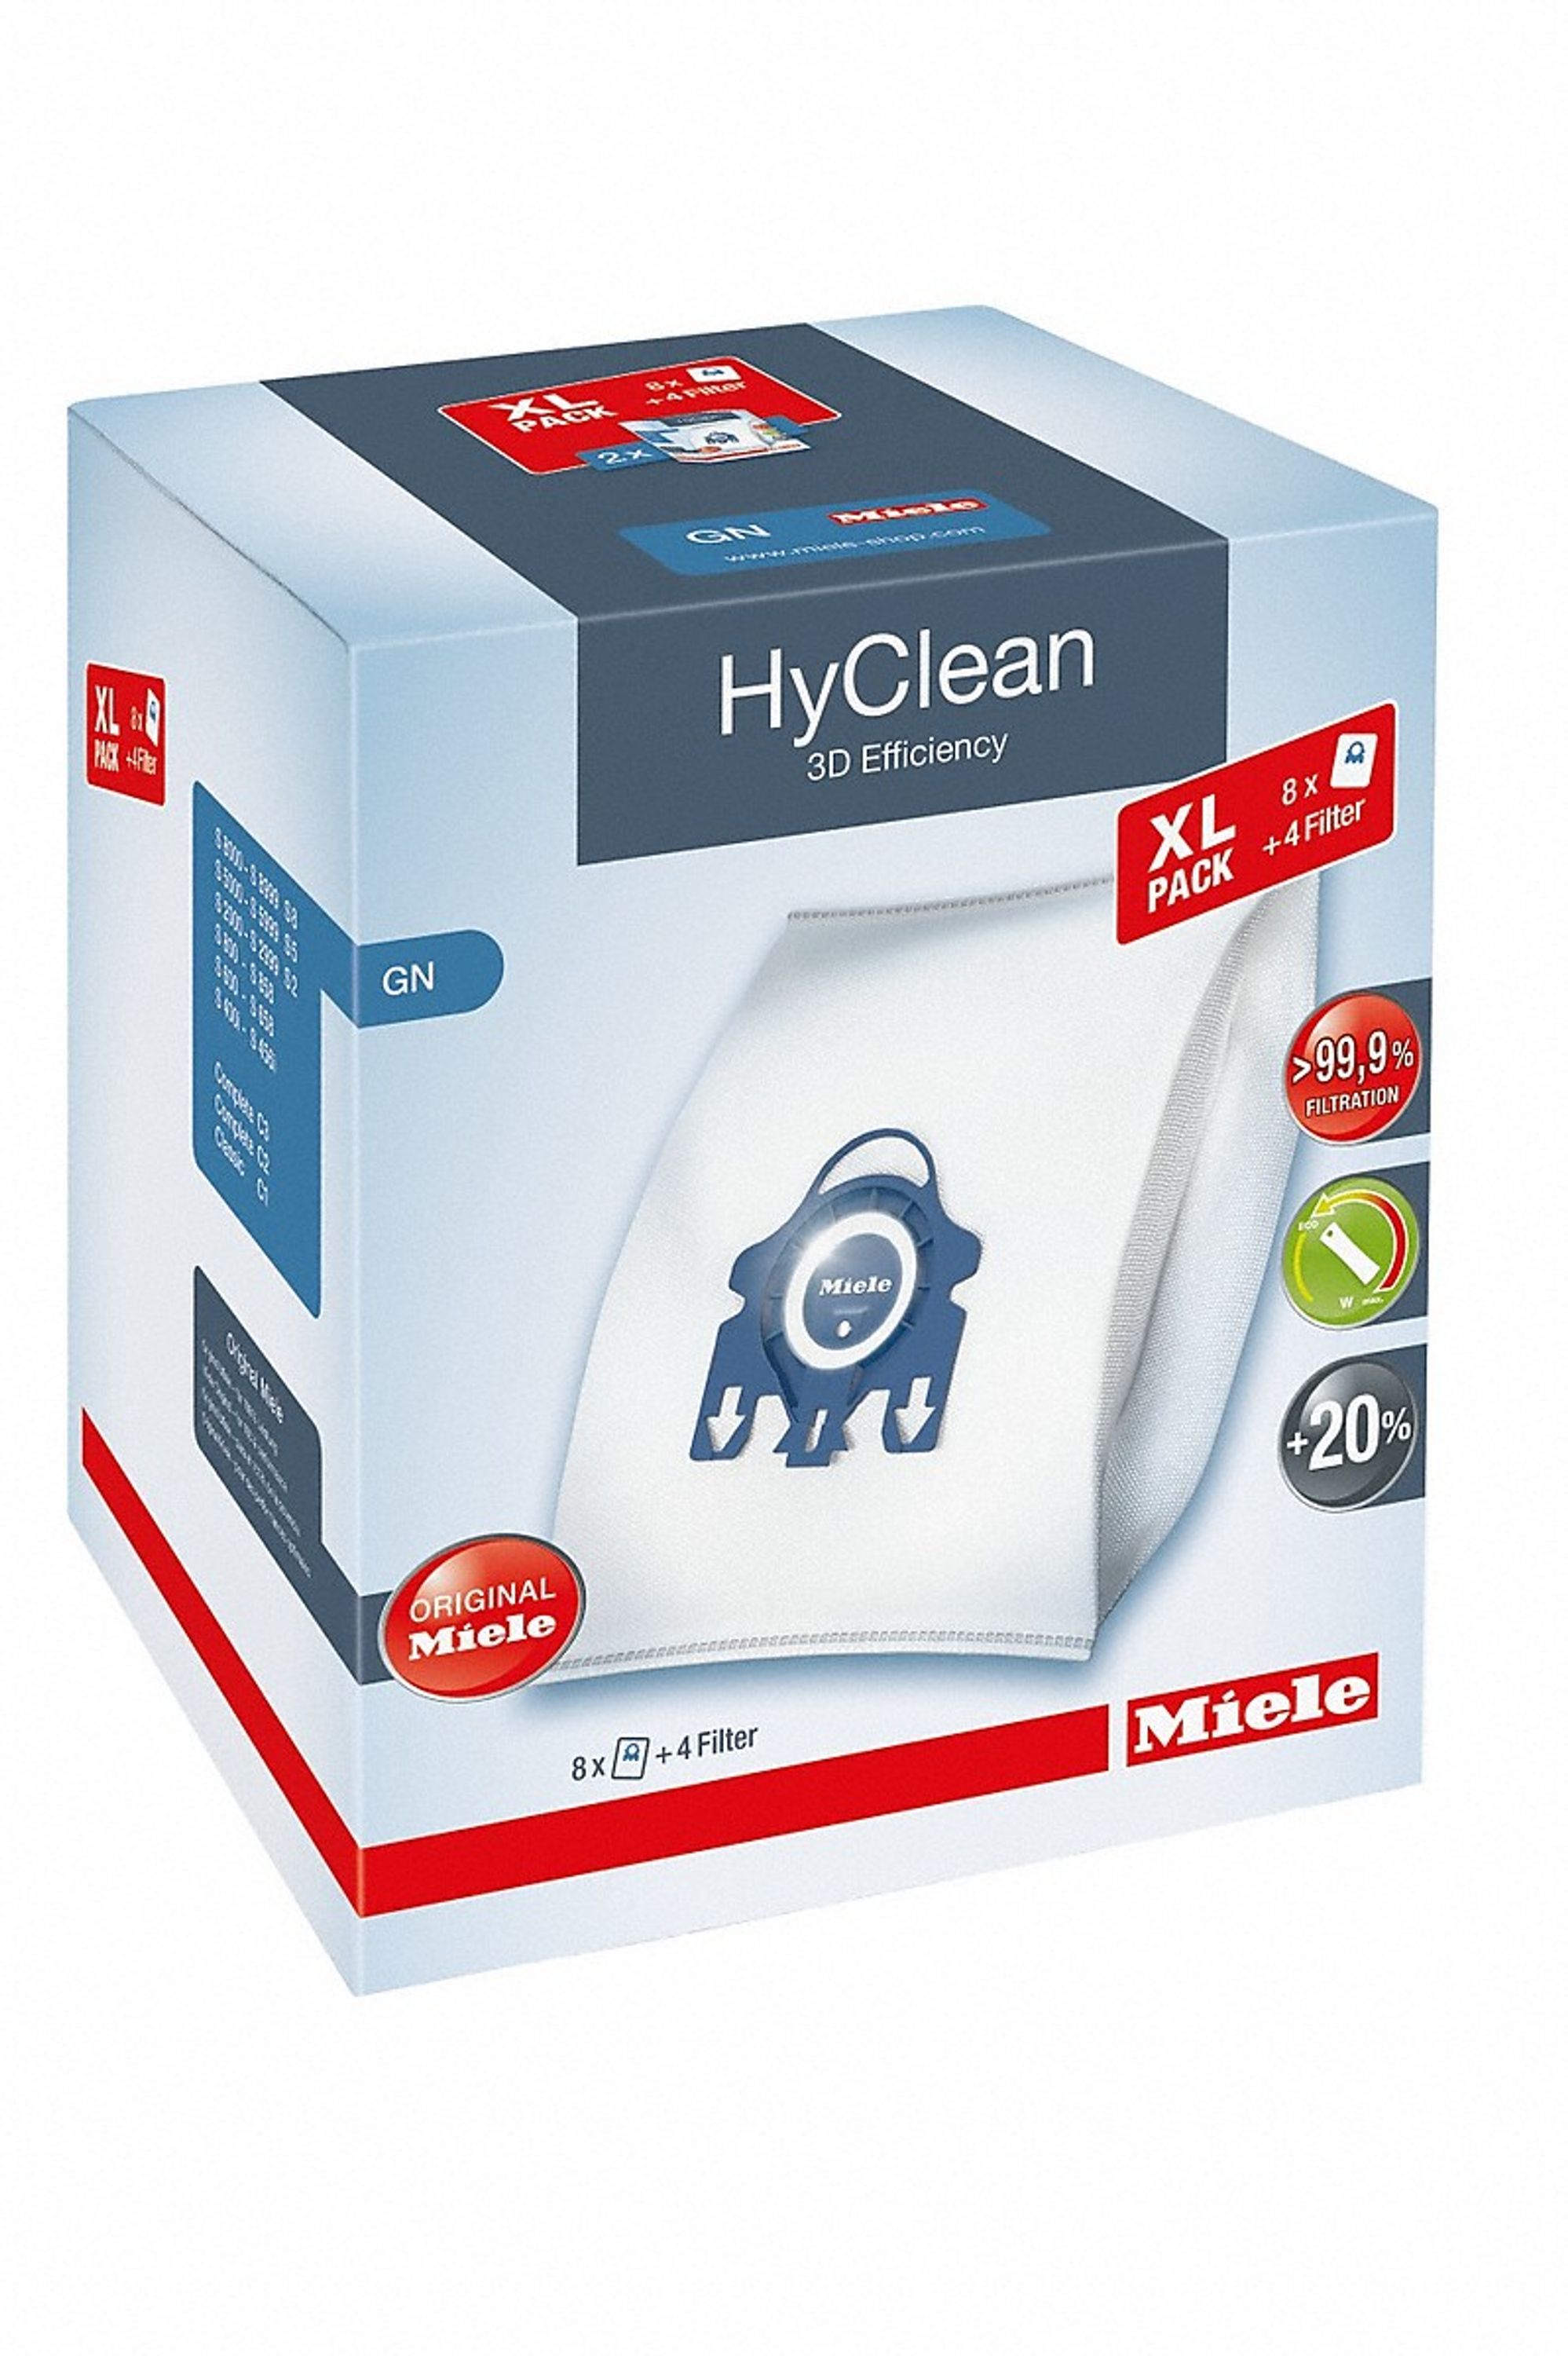 Miele HyClean 3D Efficiency GN - XL-Pack